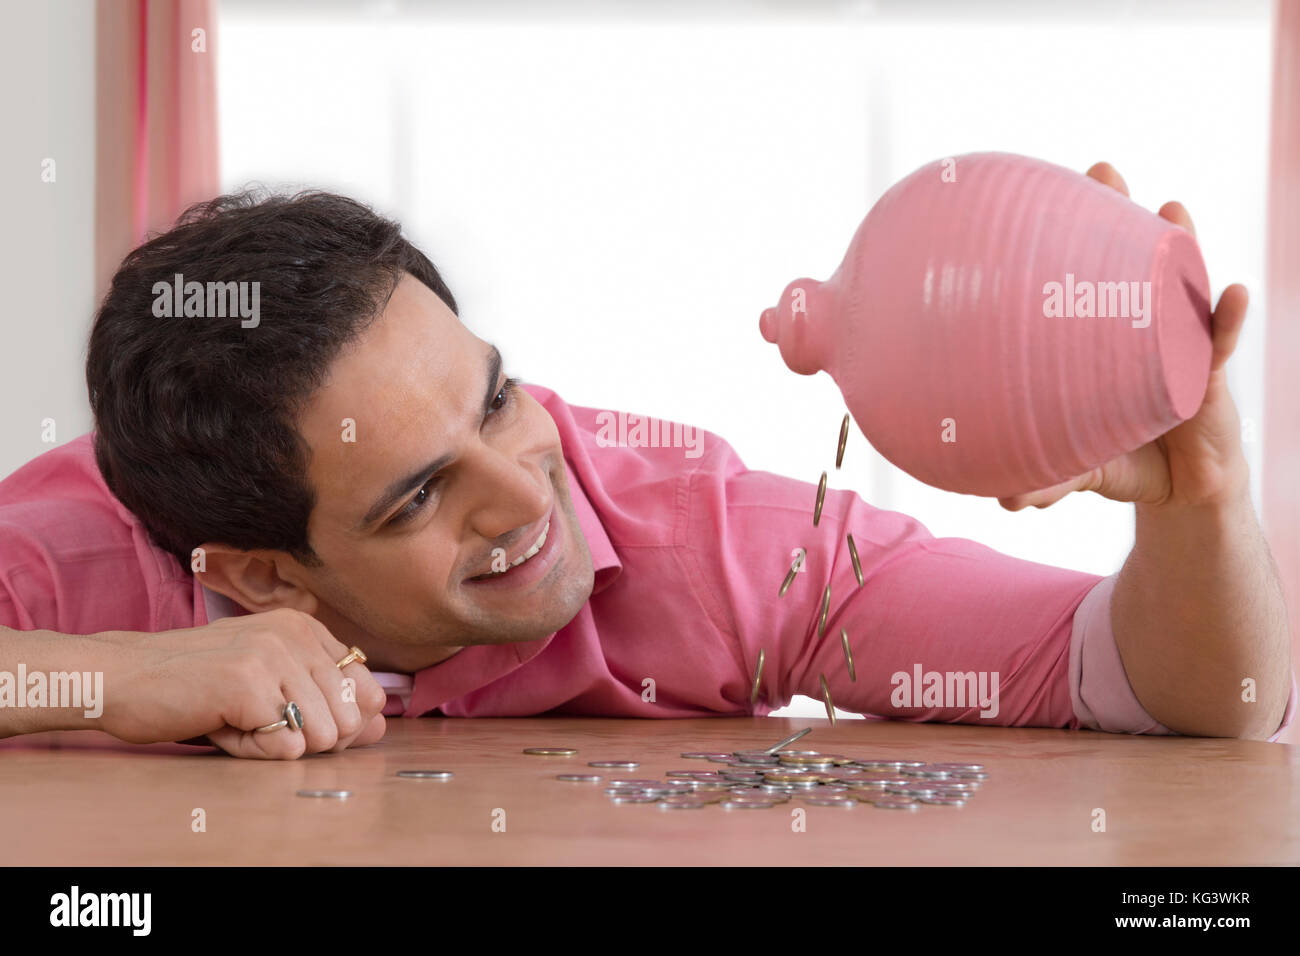 Smiling man emptying piggy bank Stock Photo